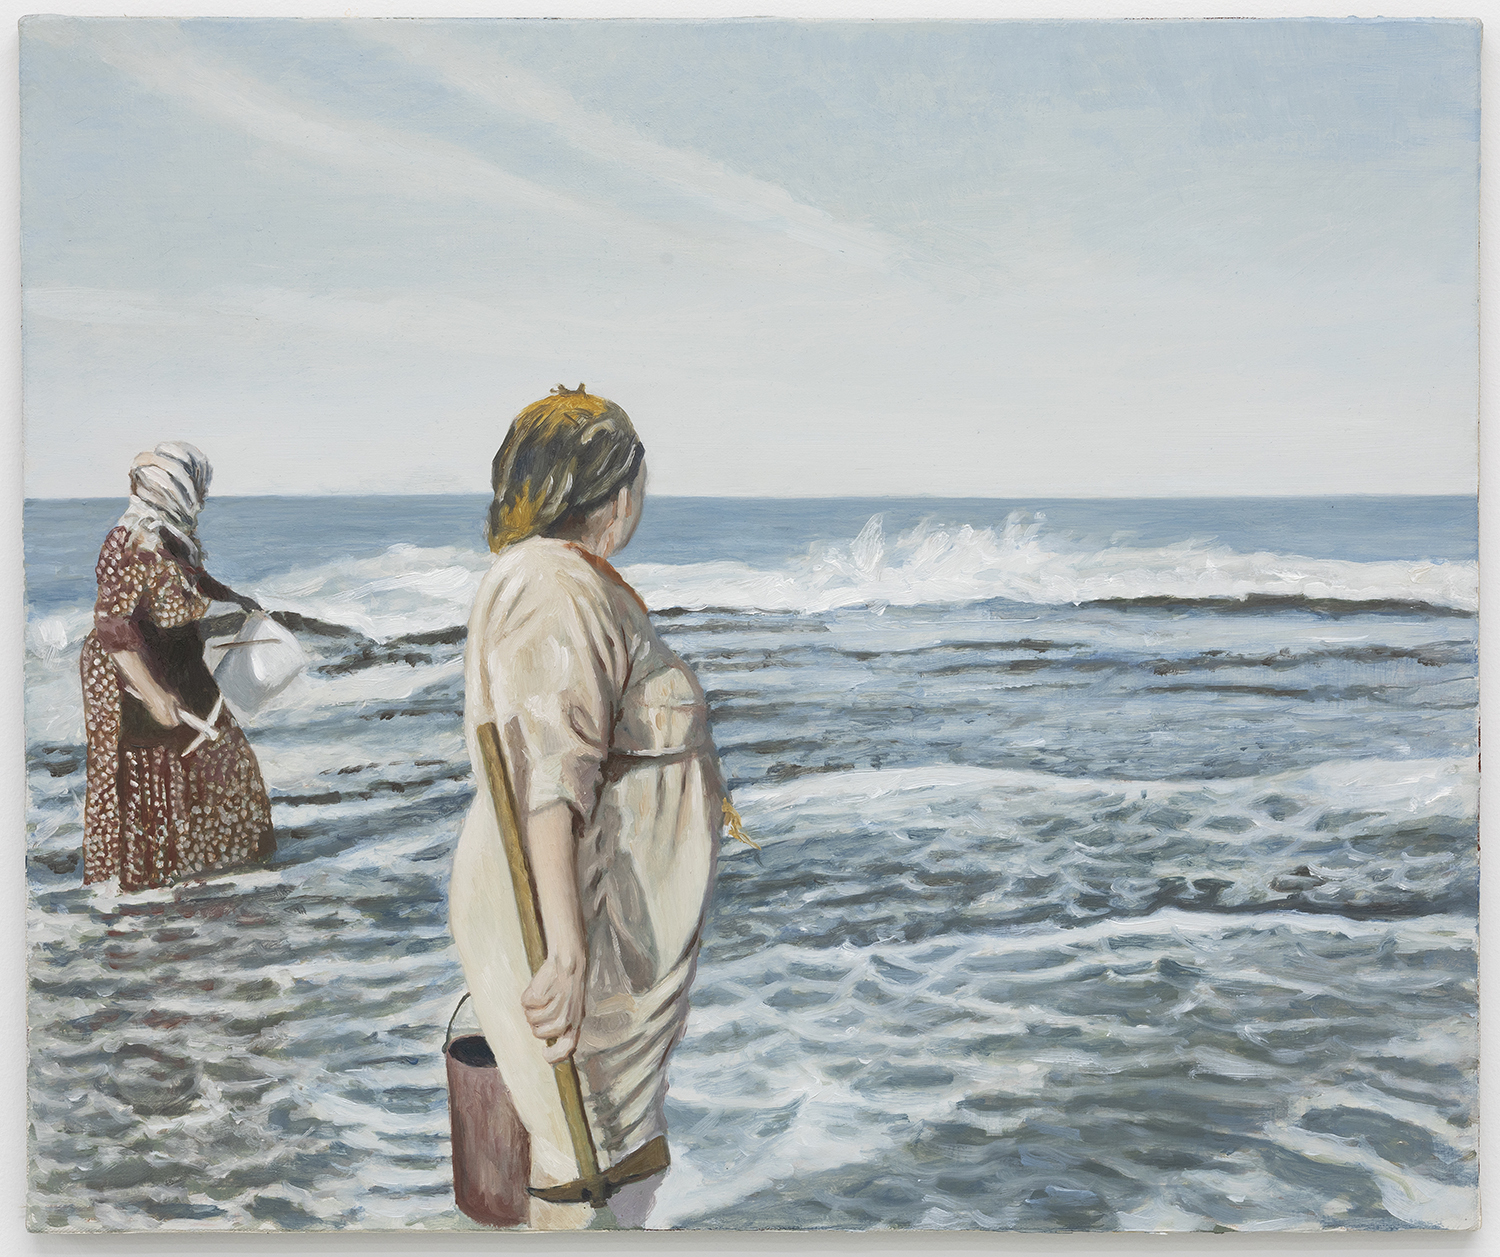 Johannes Sivertsen, Harvesting the sea, 2020, oil on canvas, 46 x 55 cm